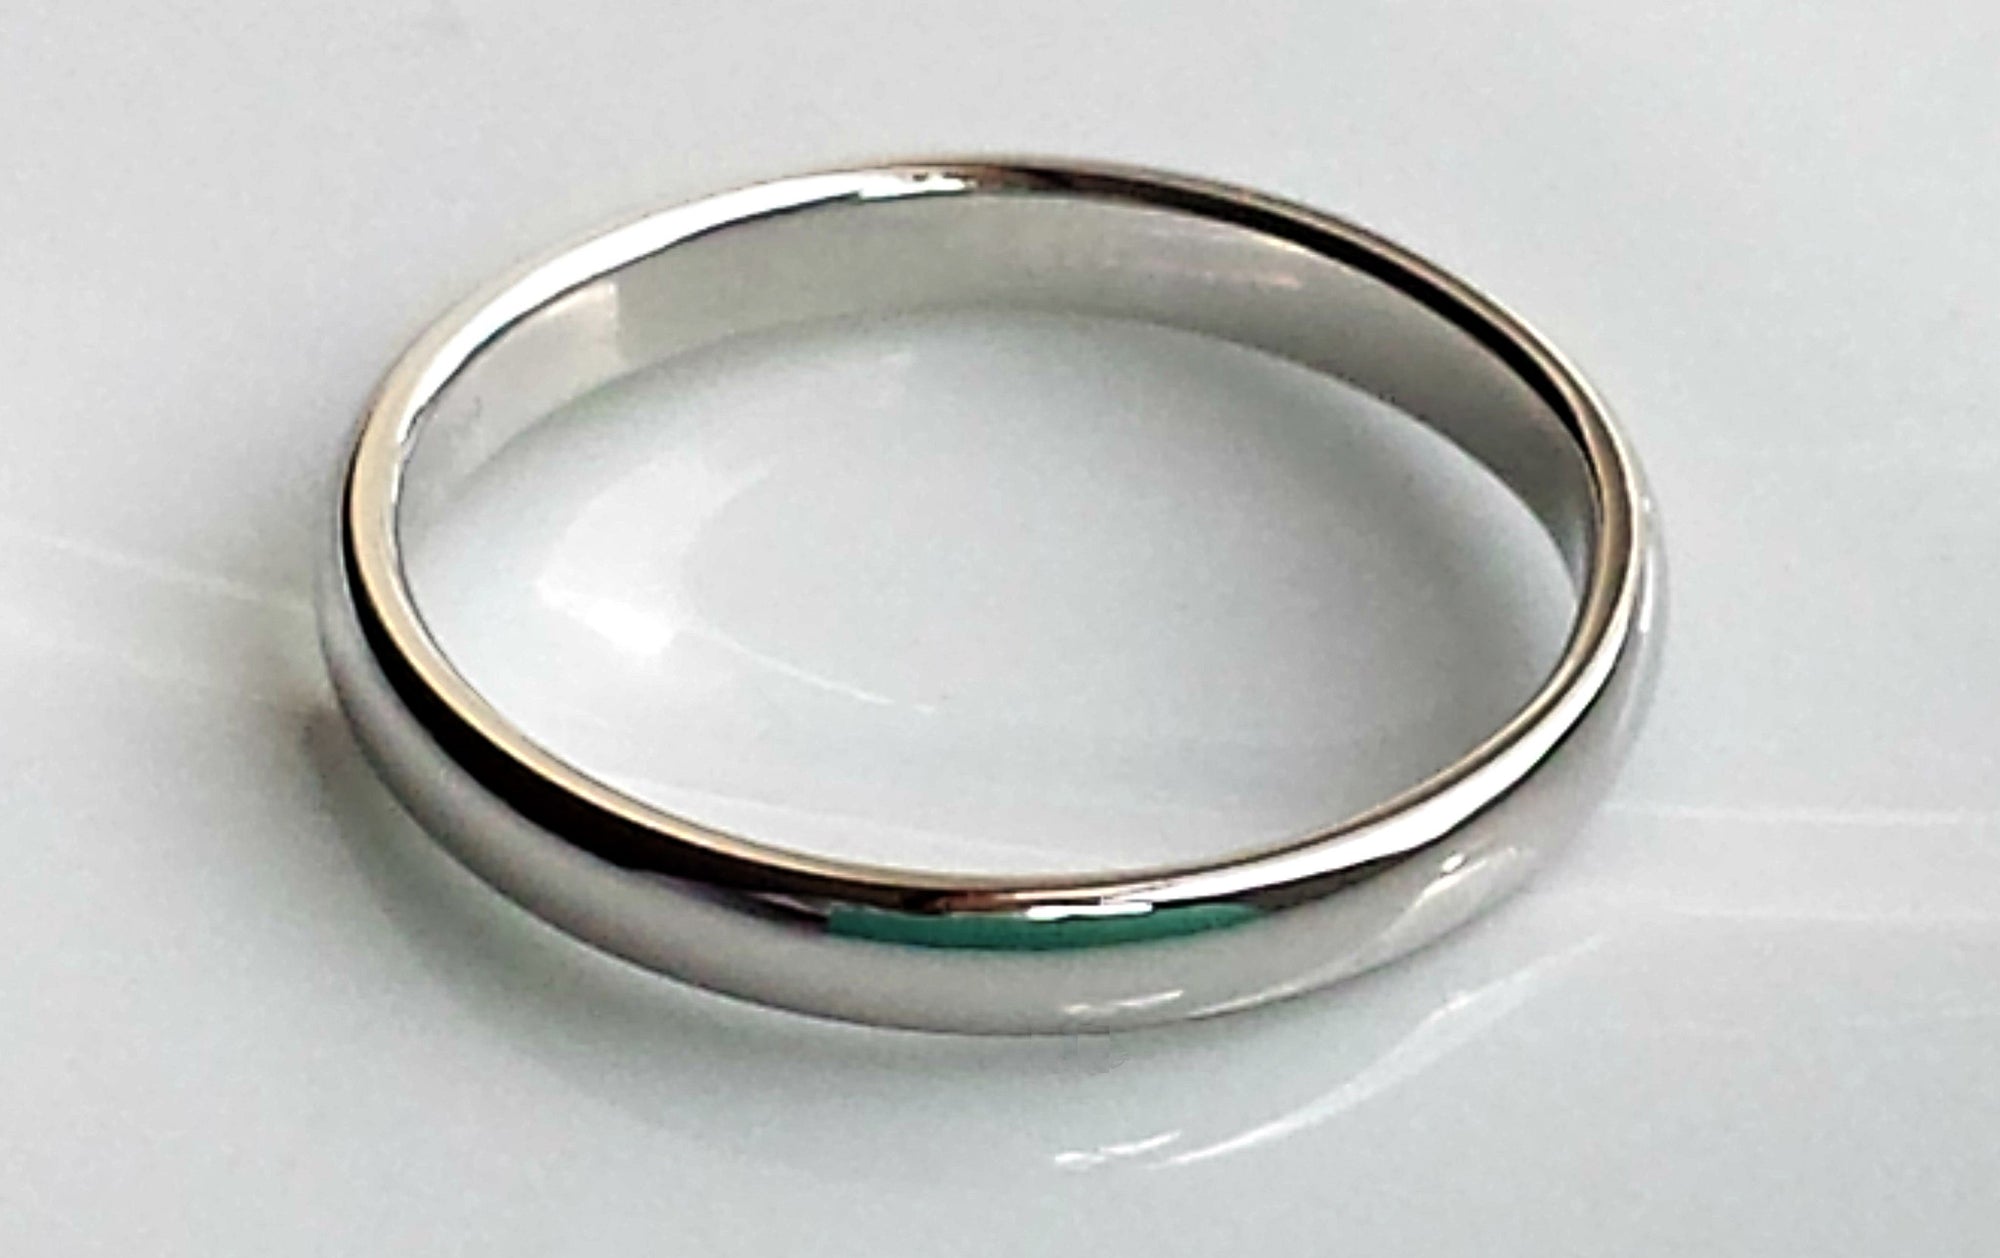 Tiffany & Co. Lucida 3mm Platinum Wedding Ring Size U